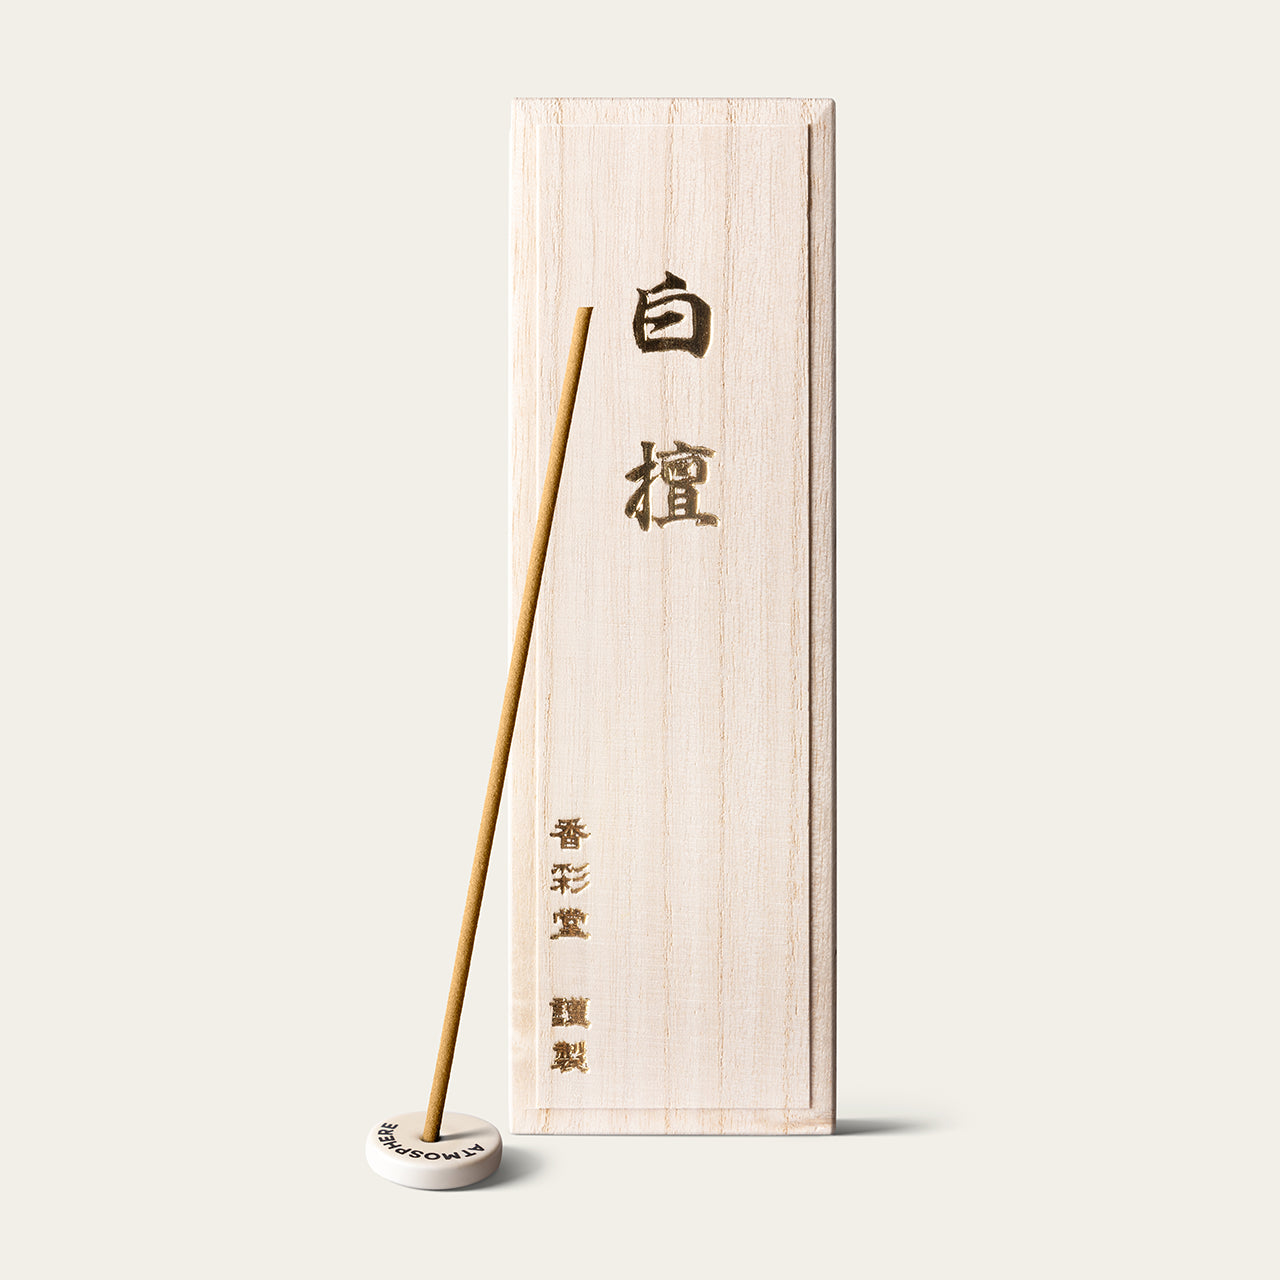 Kousaido Premium Sandalwood Supreme Japanese incense sticks (150 sticks) with Atmosphere ceramic incense holder